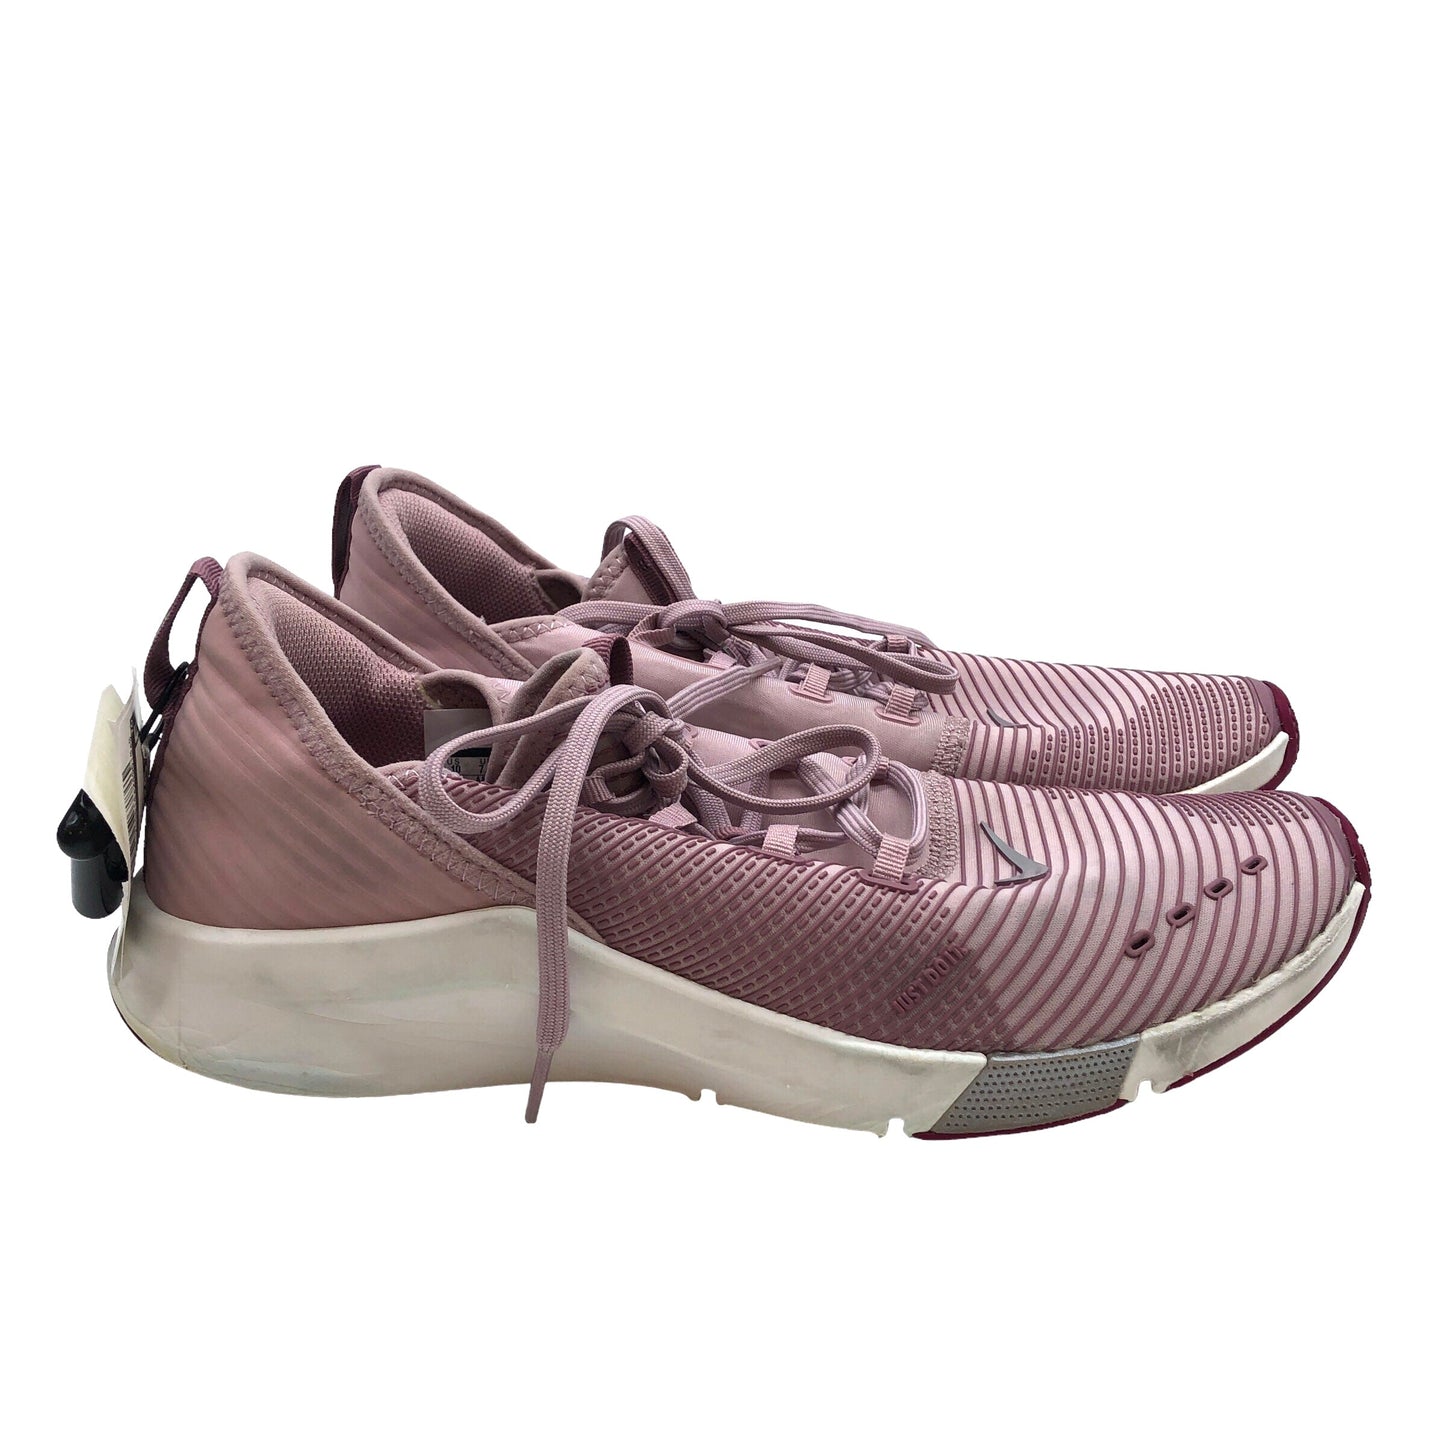 Purple Shoes Athletic Nike, Size 10